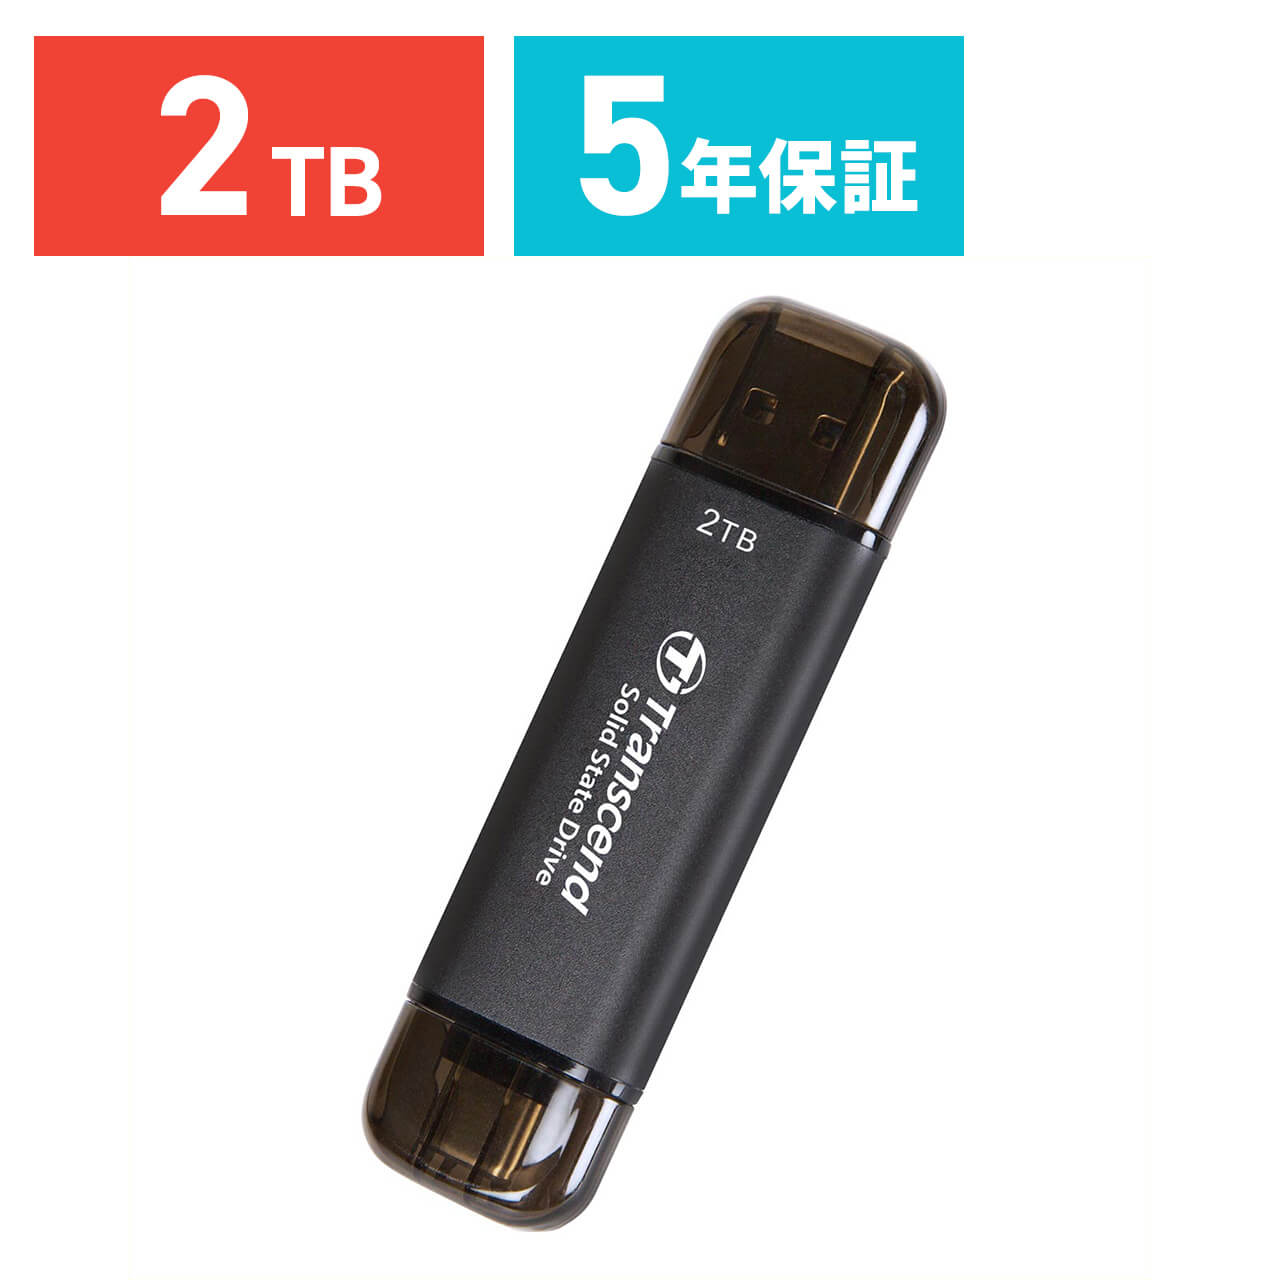 Amazon.co.jp: BUFFALO 無線(2.4GHz)光学式マウス 静音/3ボタン ブラック BSMOW20SBK : パソコン・周辺機器